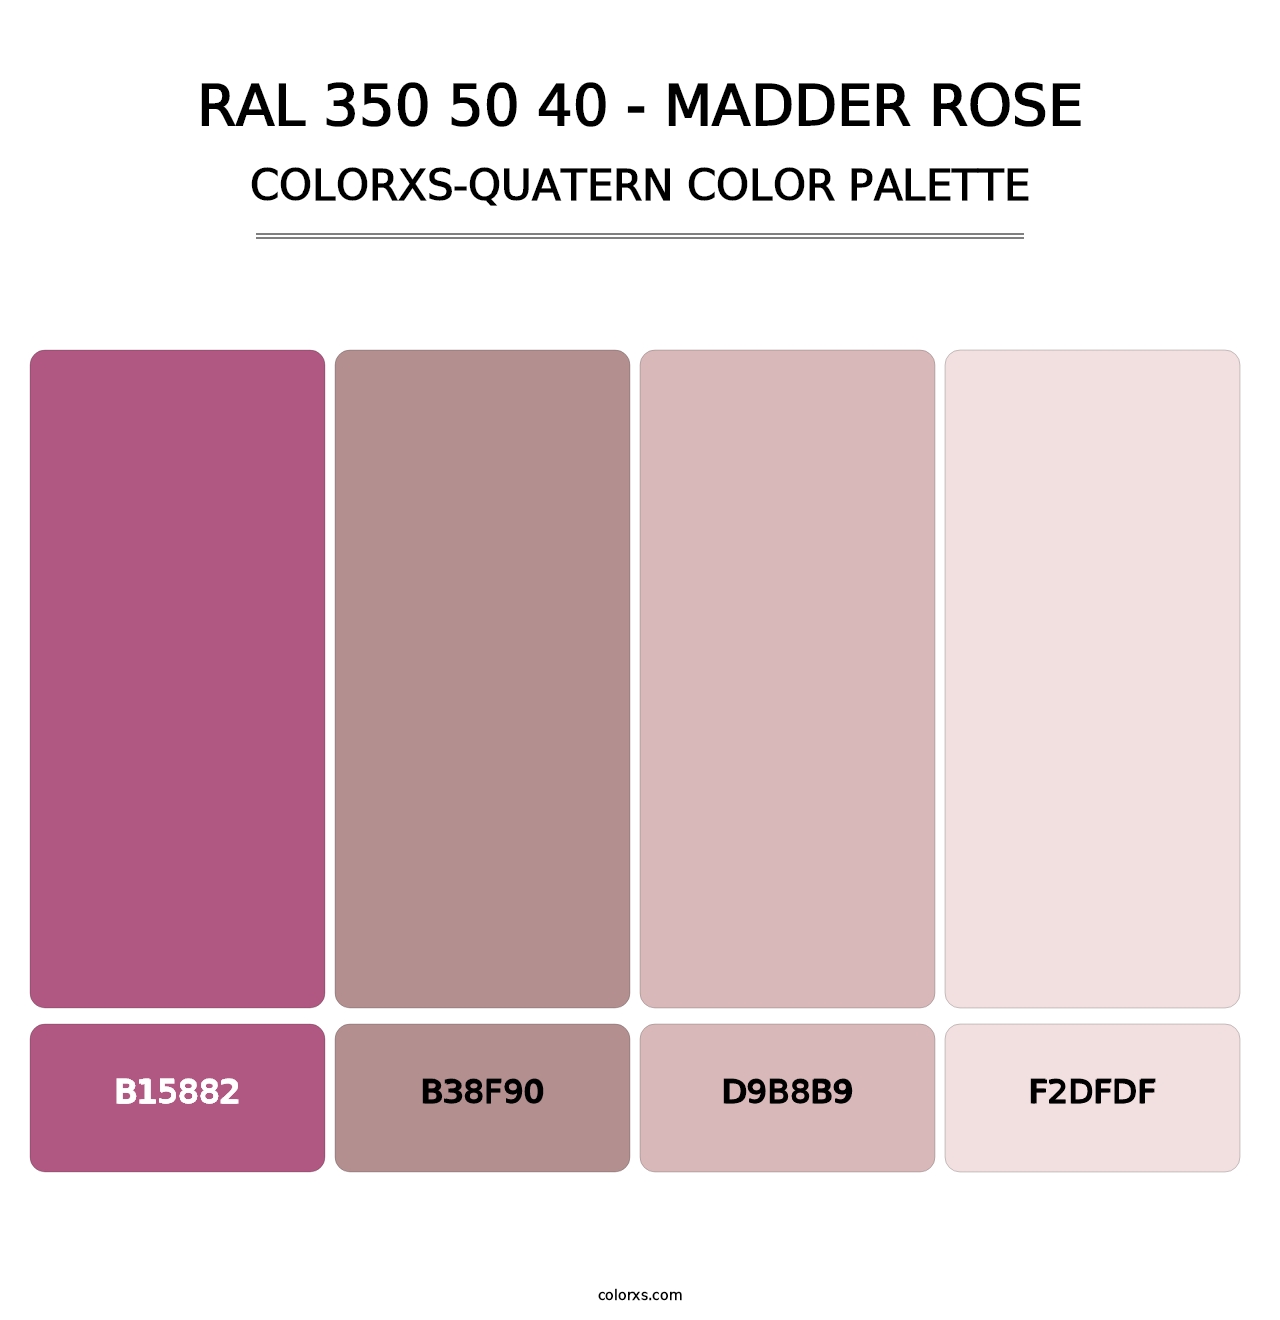 RAL 350 50 40 - Madder Rose - Colorxs Quatern Palette